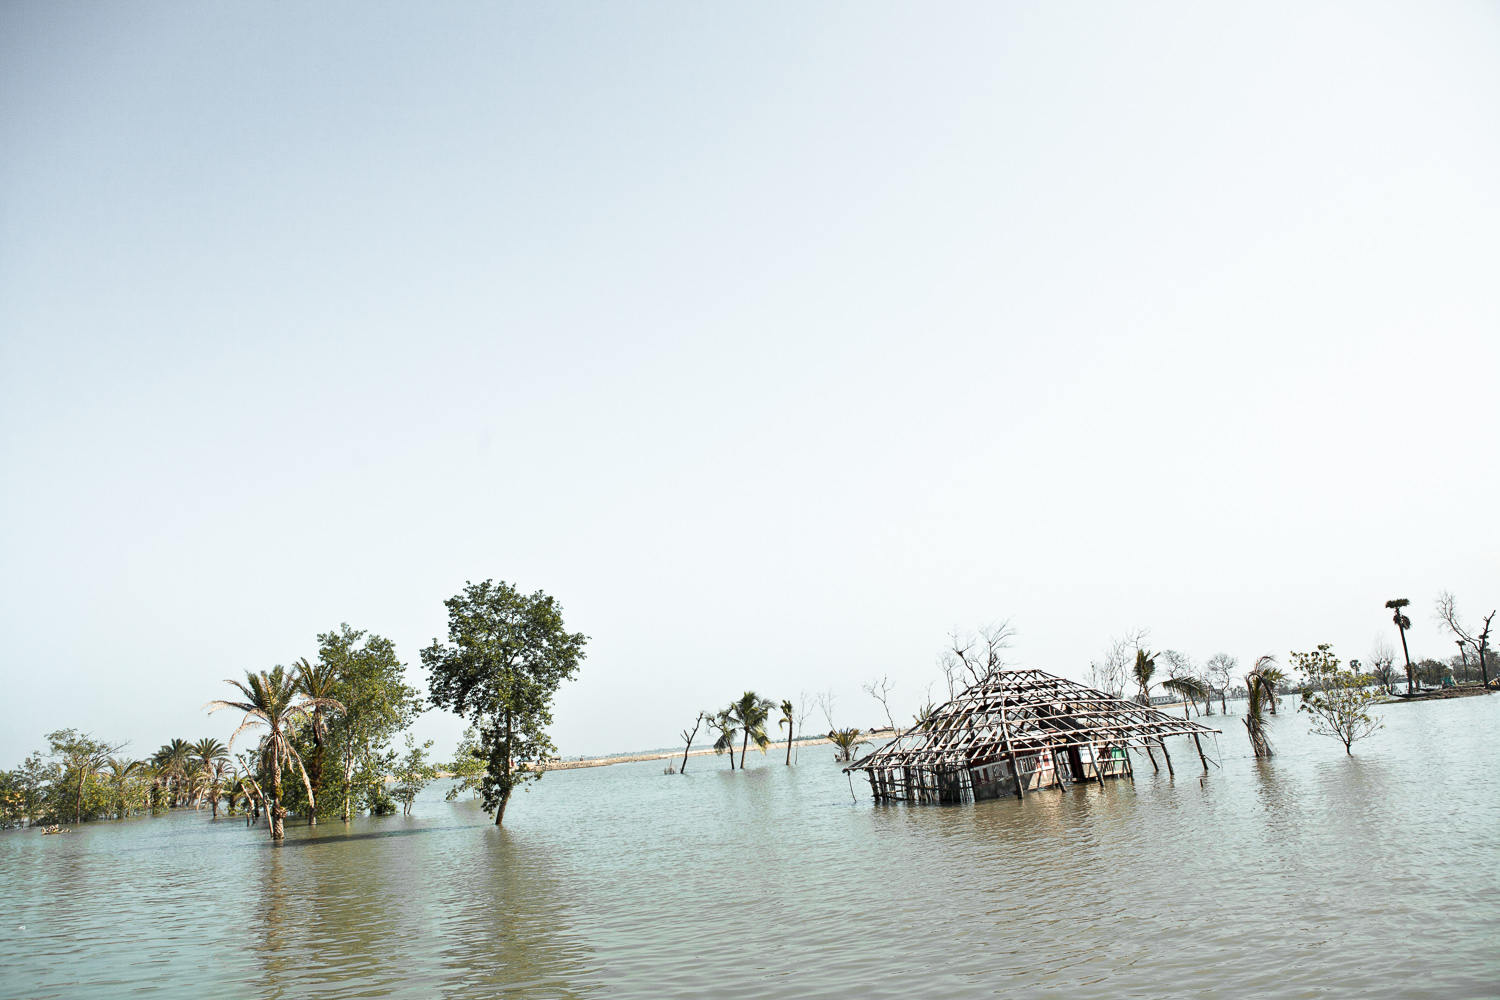 climate-migrants-bangladesh-maria-litwa-4110.jpg